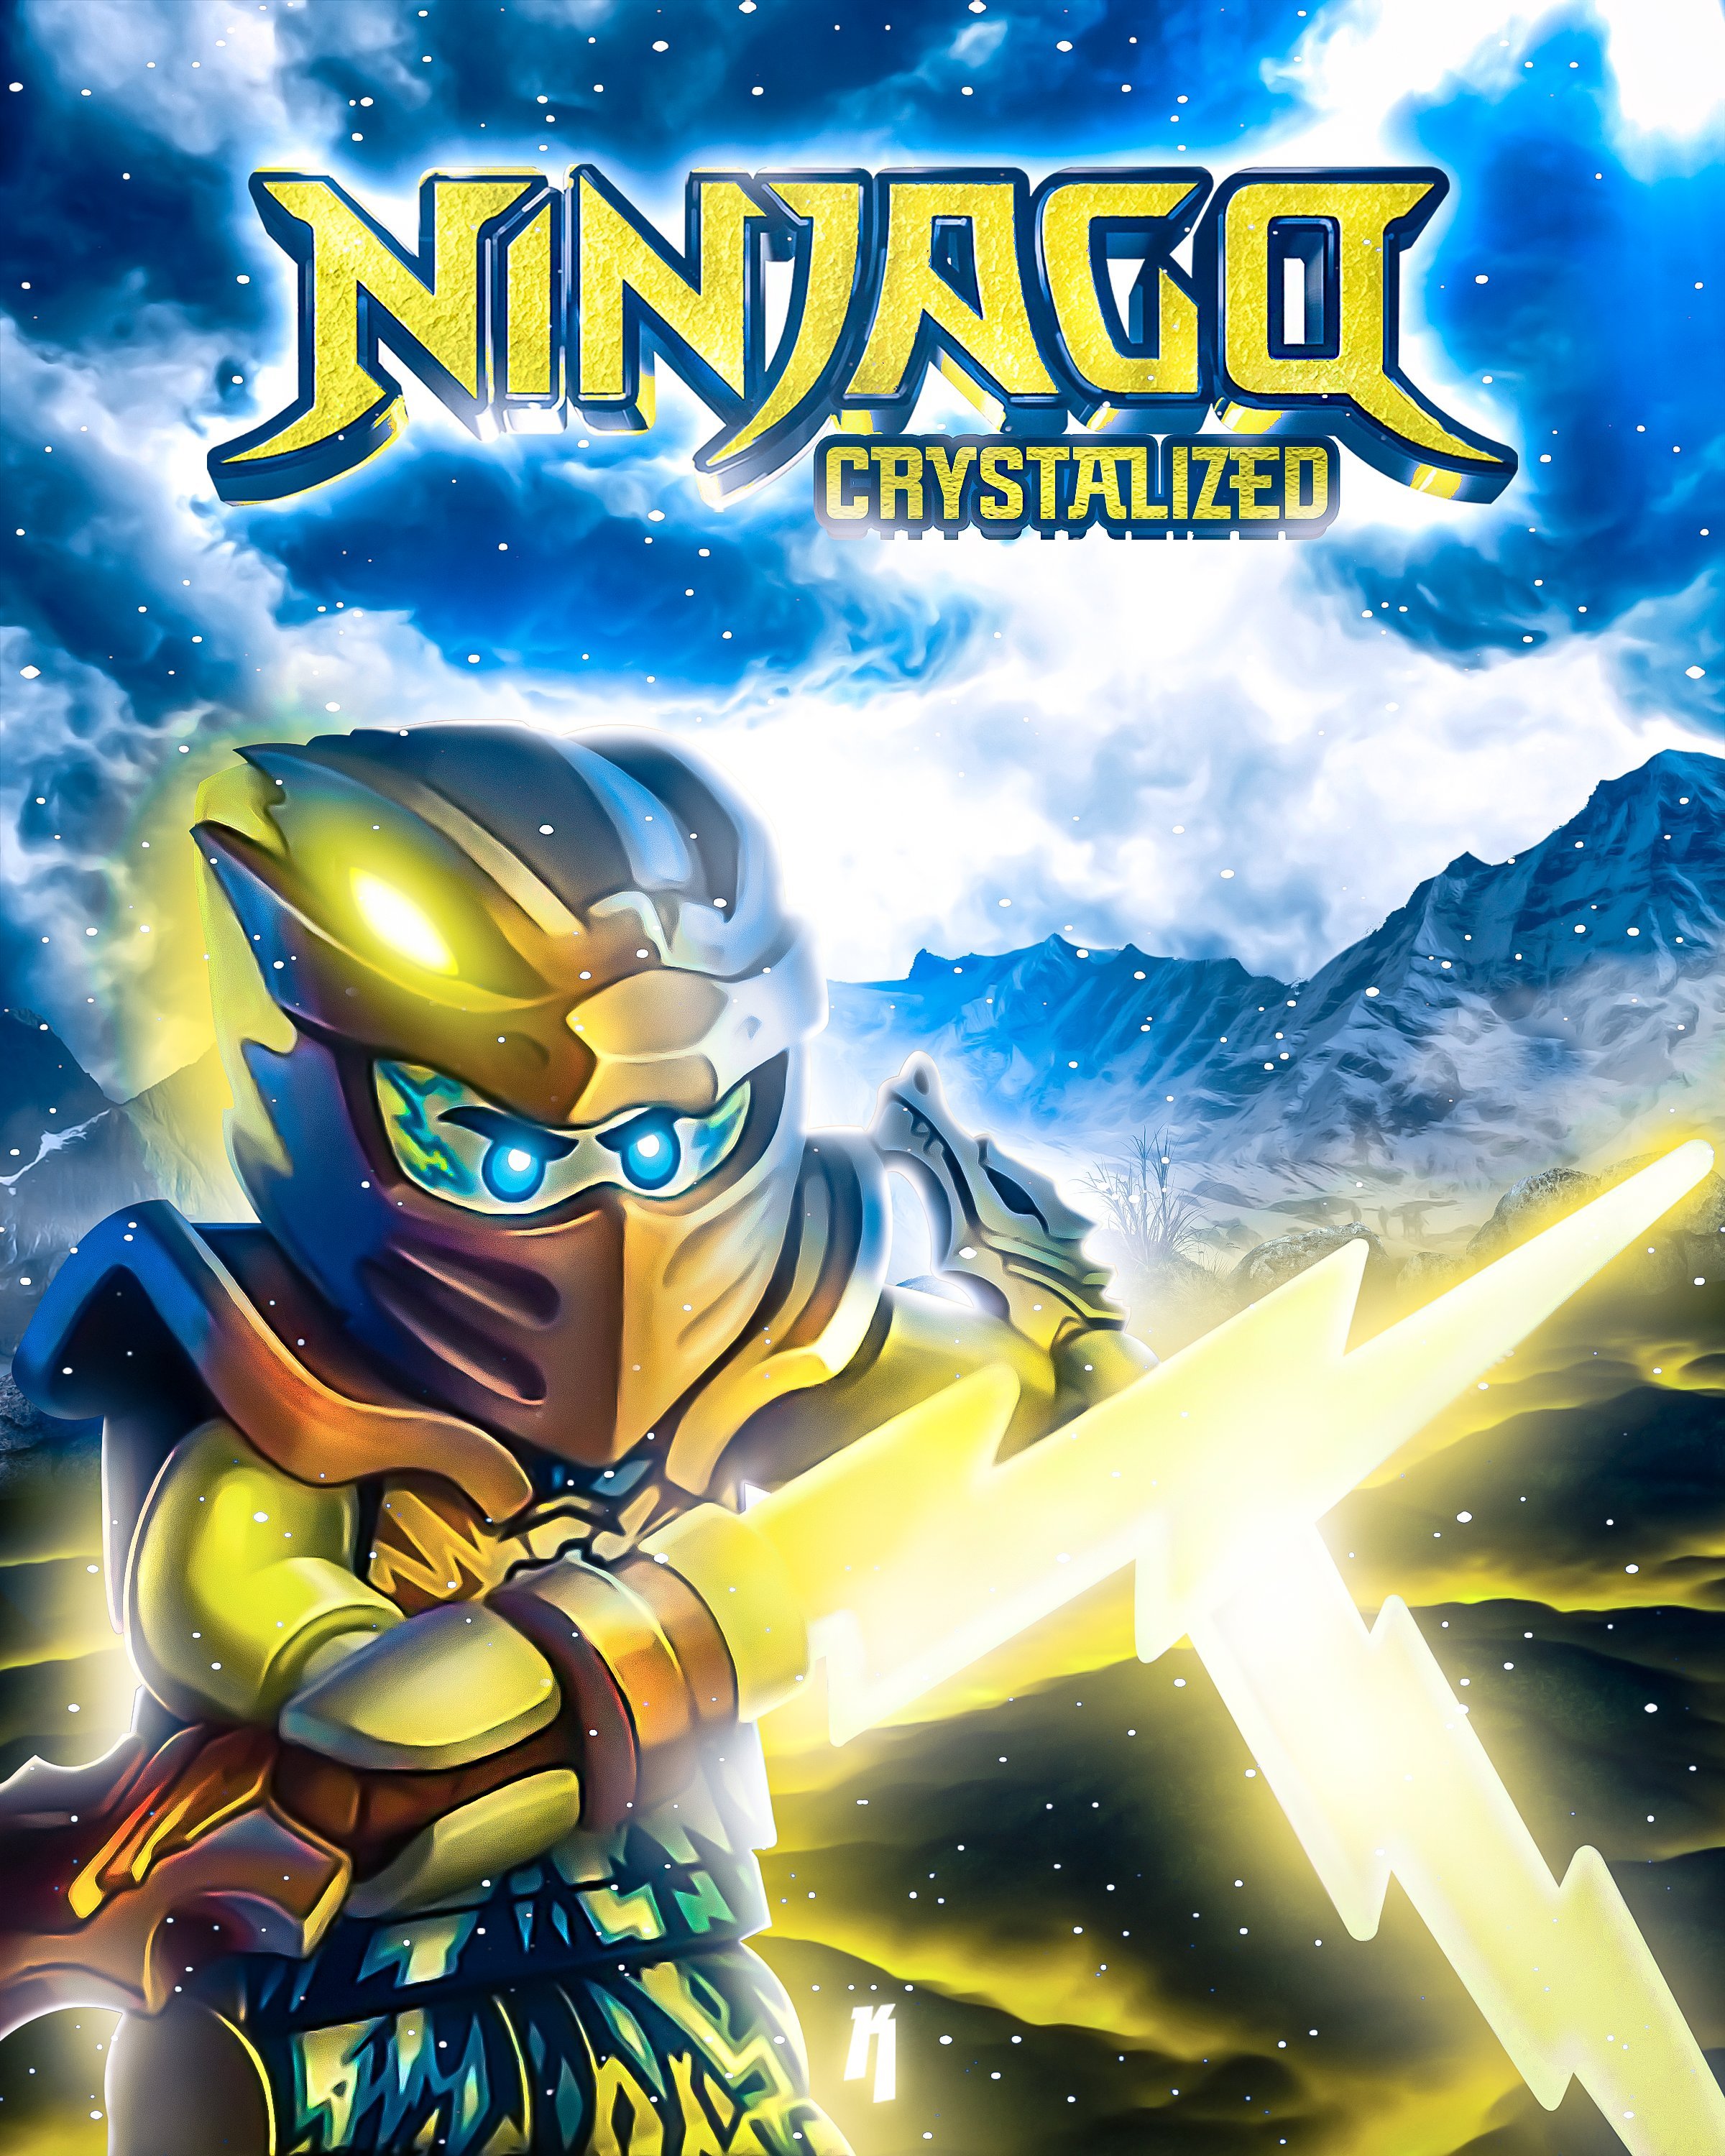 Nothing to write here on Instagram Ninjago  Season 16  Crystalized  poster Looks pretty good  Ninjago  Ninjago Trollhunters characters  How to look pretty